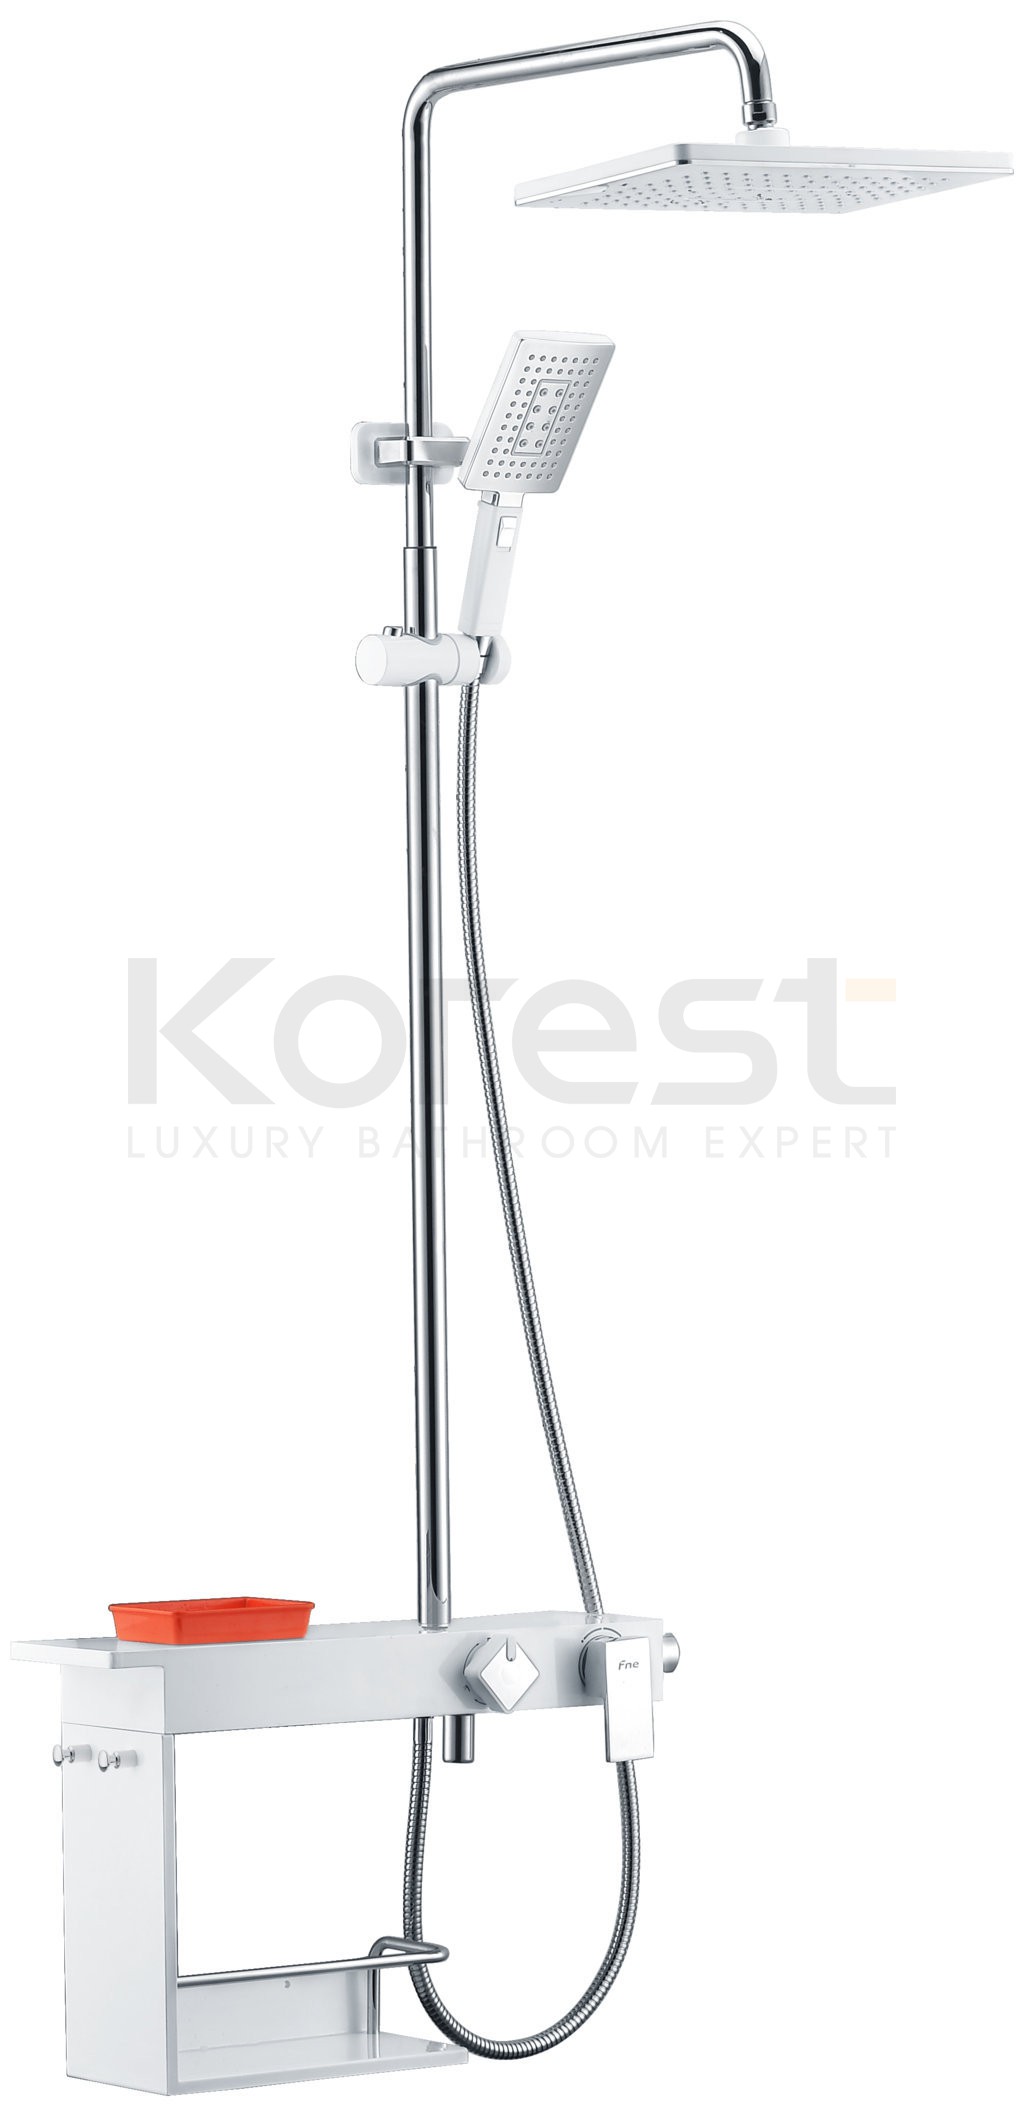 Bộ sen tắm cao cấp Korest K1203